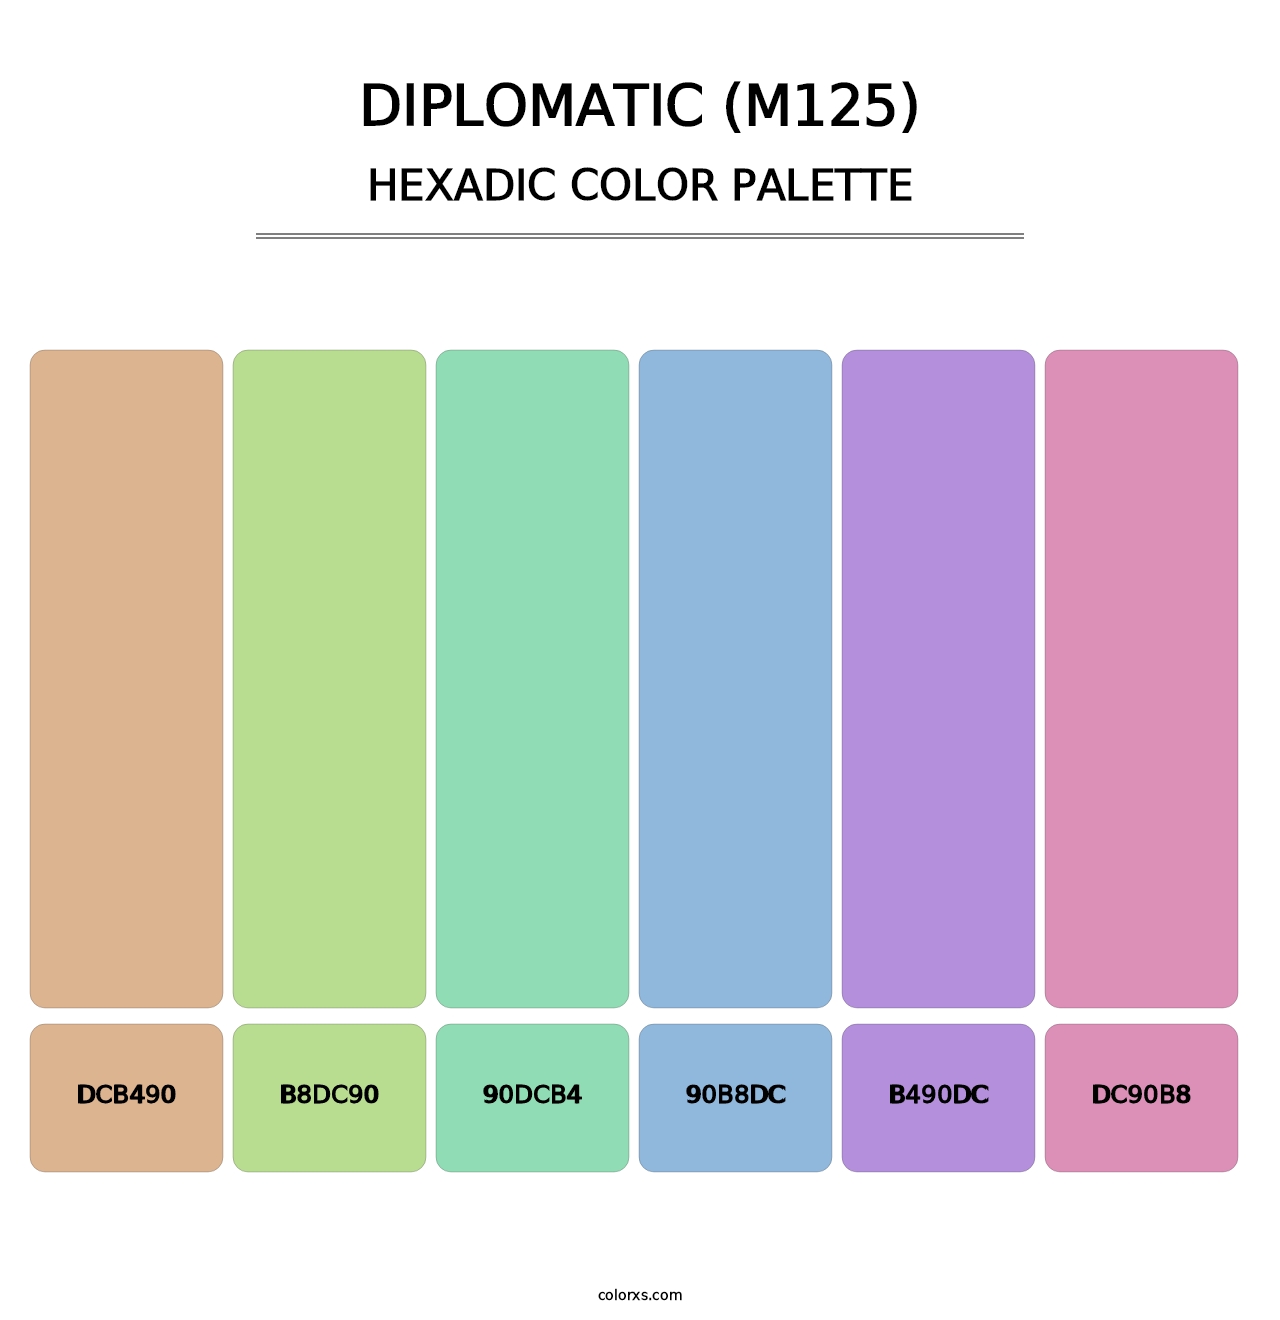 Diplomatic (M125) - Hexadic Color Palette